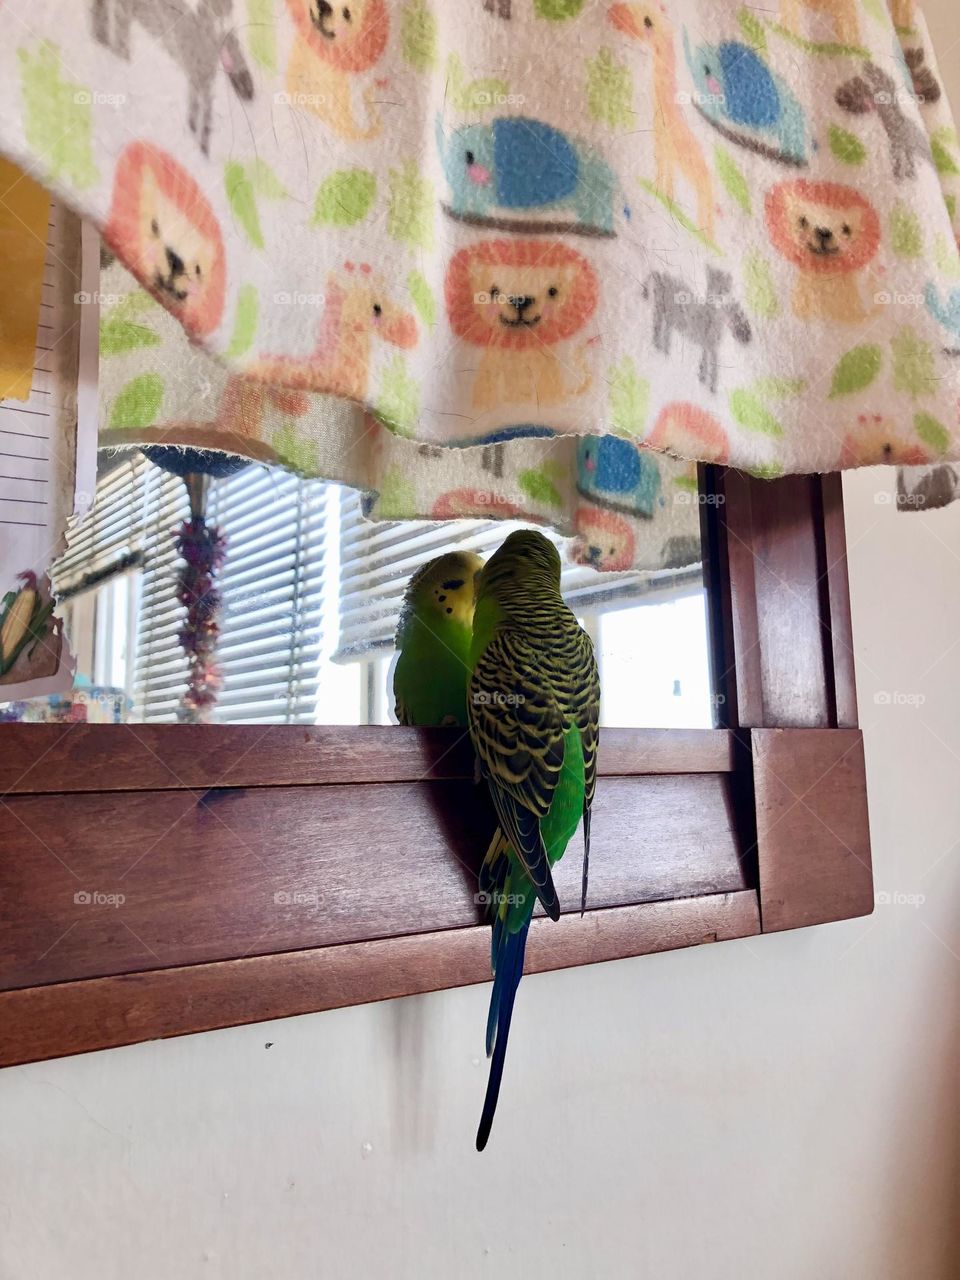 Playful Kiwi at the mirror / My pet parquet 🦜 